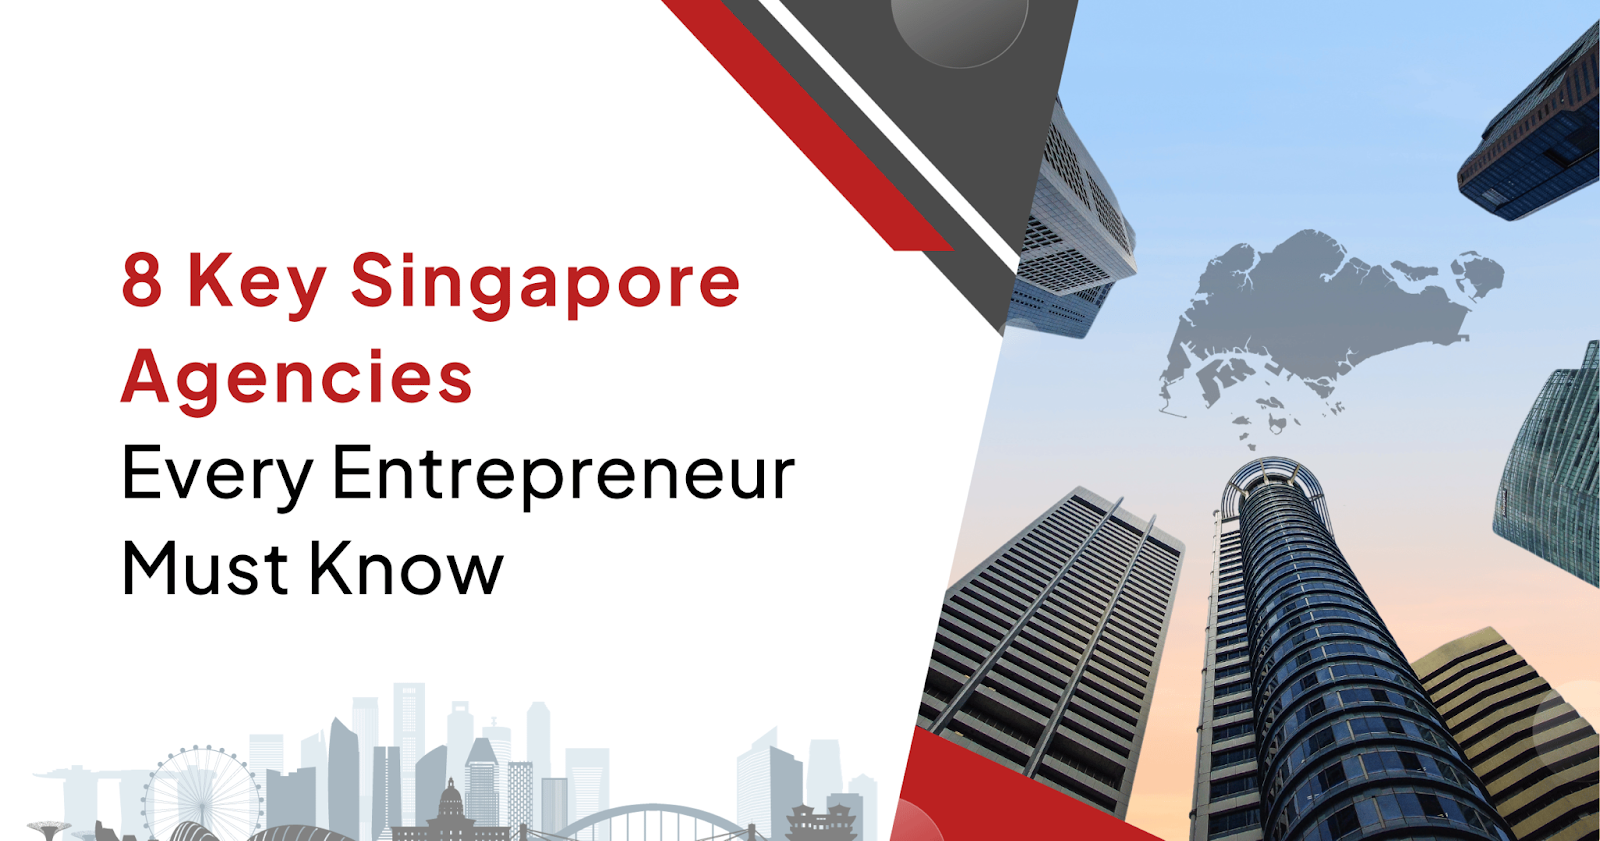 Key Singapore Agencies Every Entrepreneur Must Know